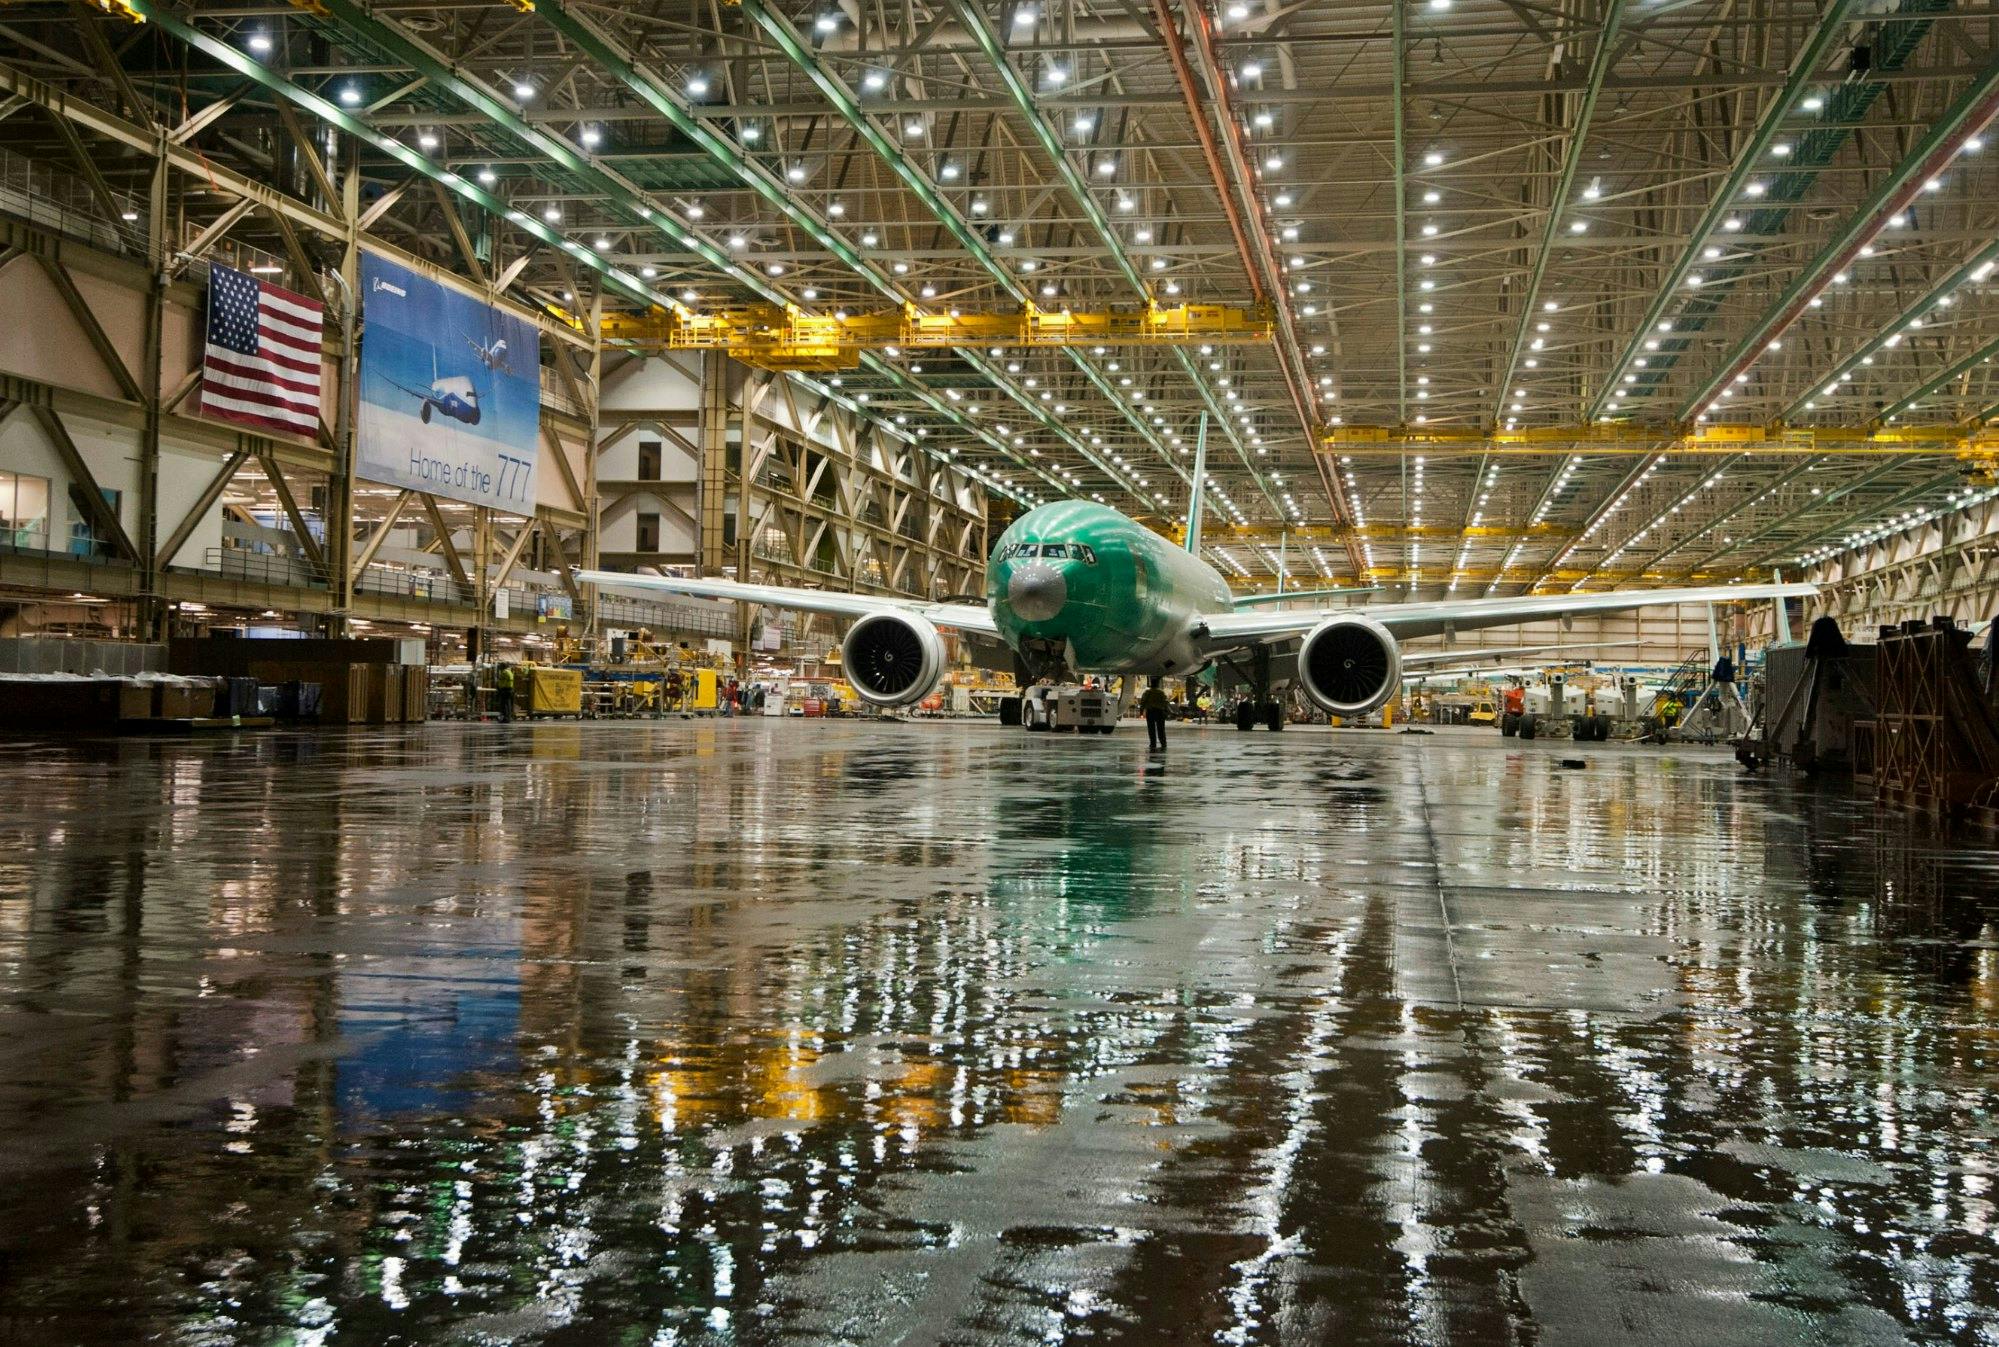 Rondleiding door Boeing Factory en Future of Flight Aviation Center